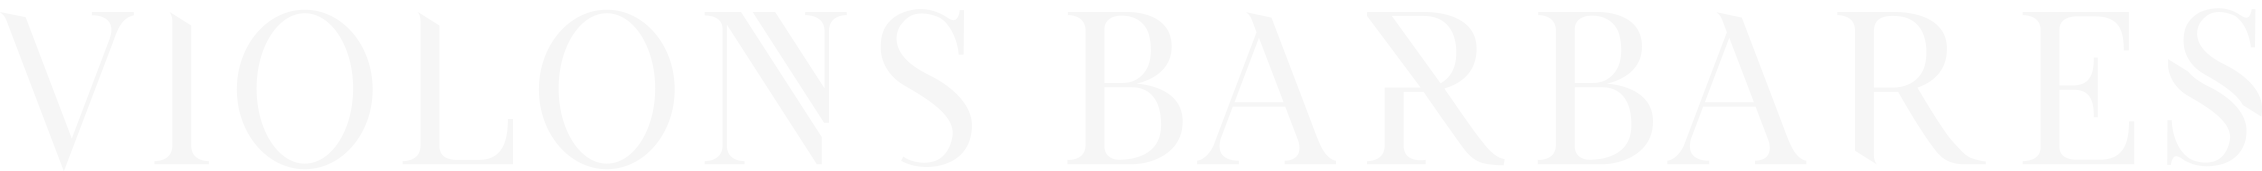 Violons barbares - logo